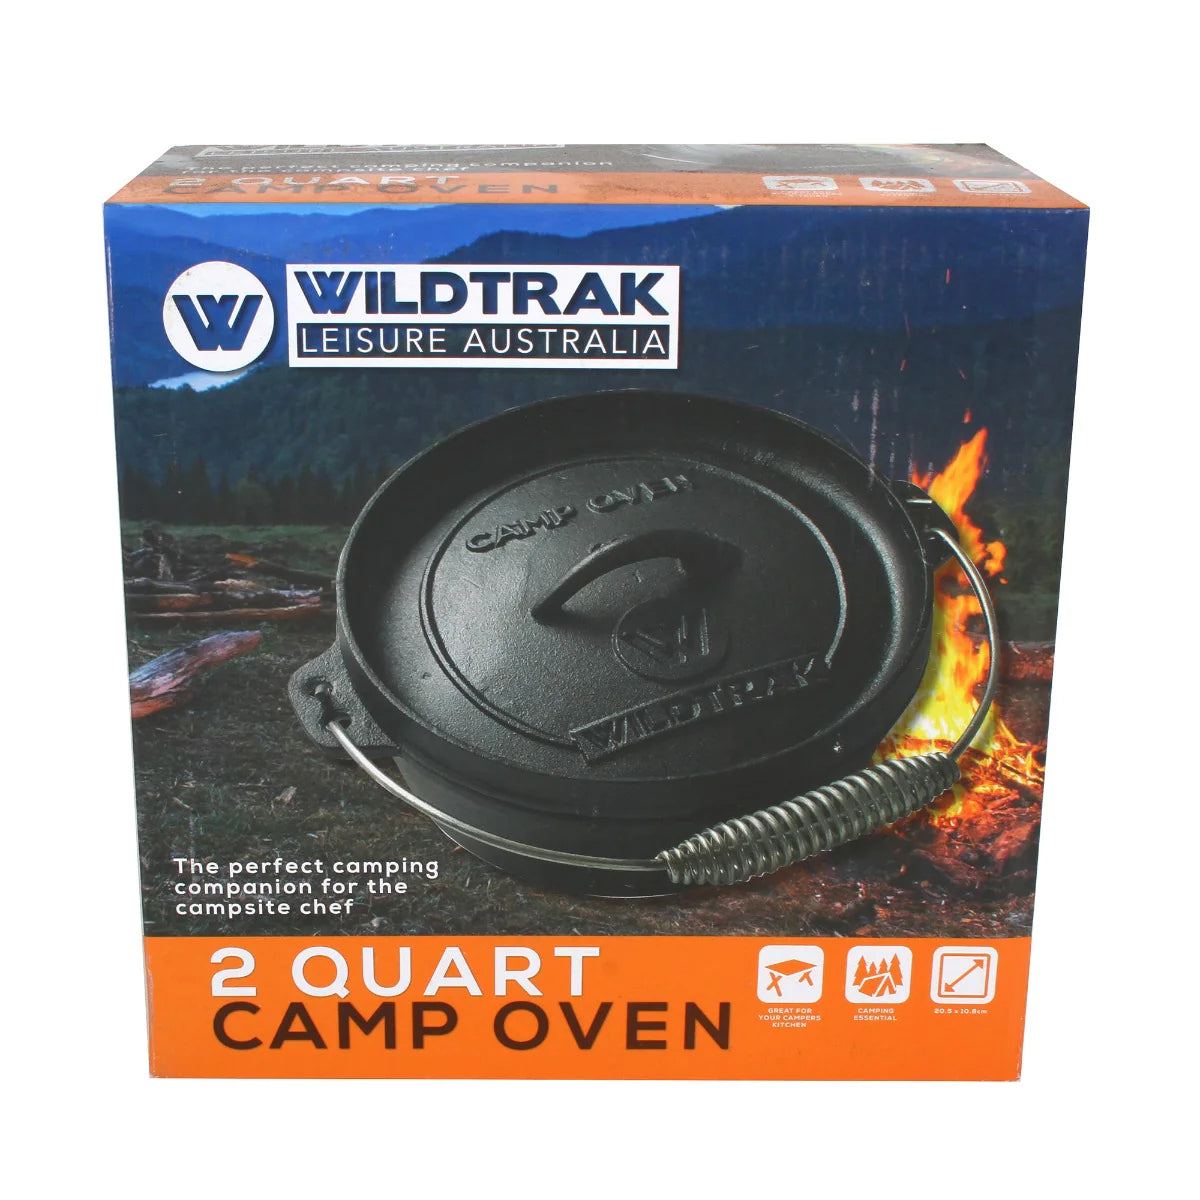 Wildtrak Cast Iron Camp Oven - 2 Quart